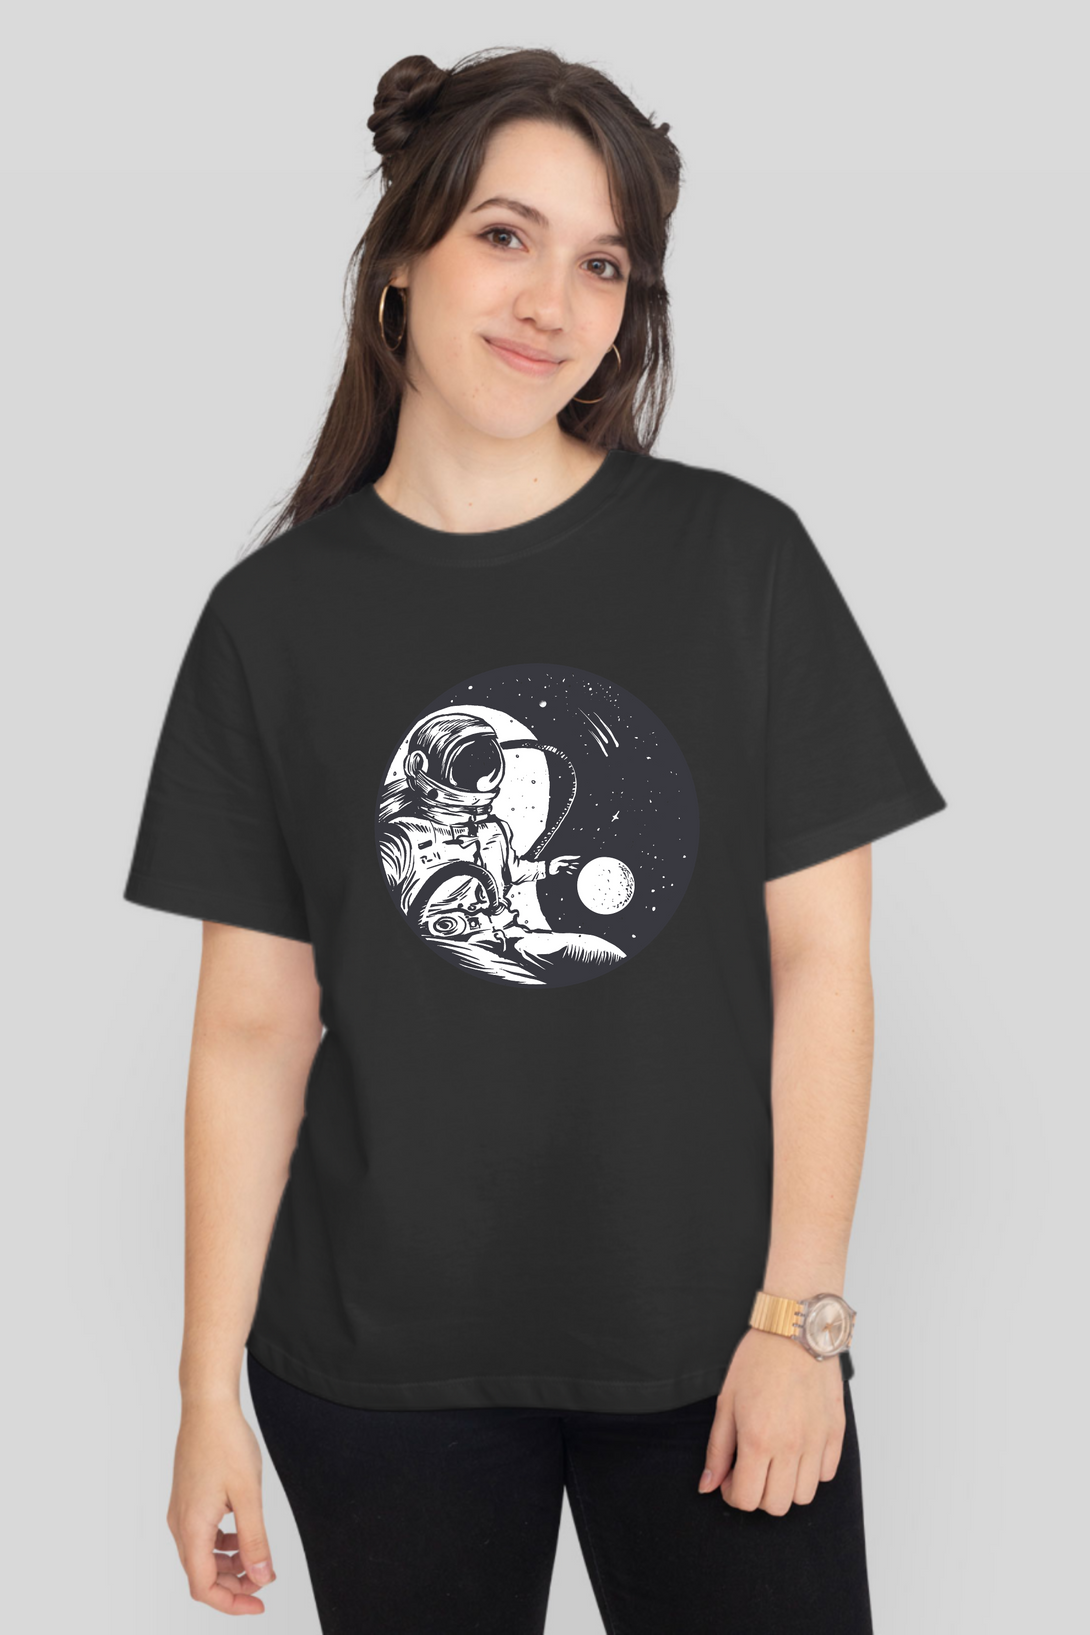 Cosmic Balance Printed T-Shirt For Women - WowWaves - 7